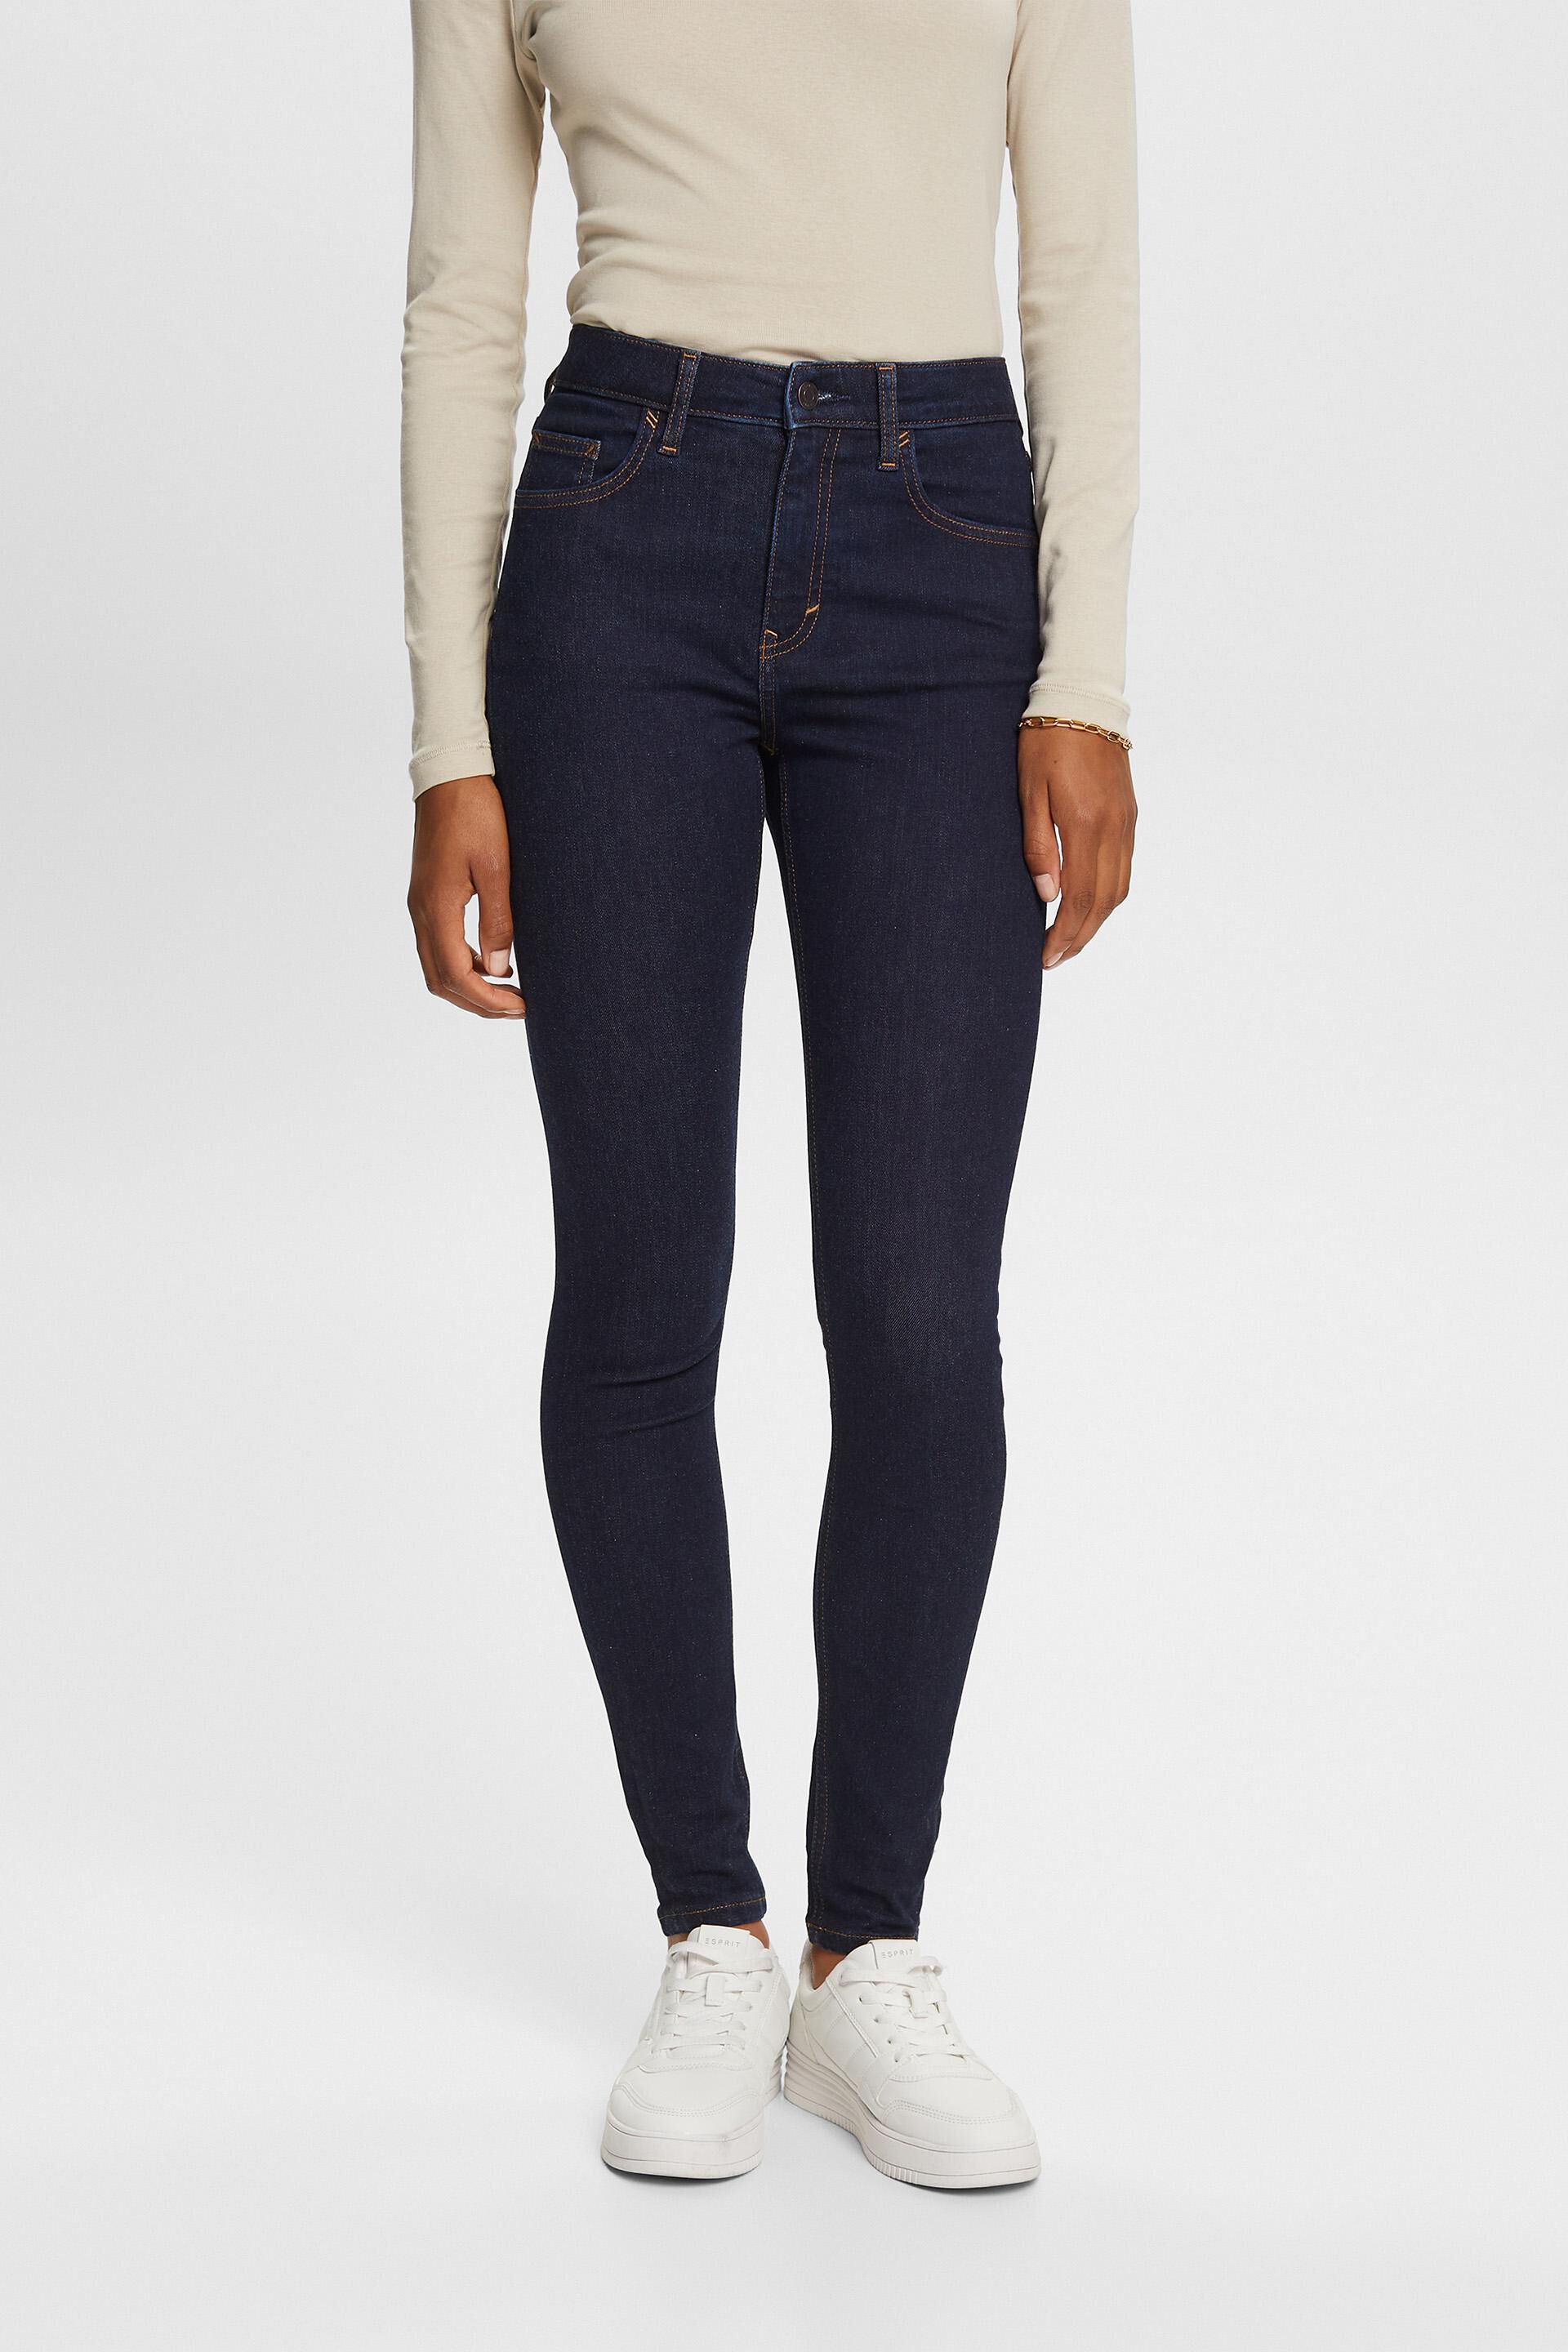 Esprit stretch cotton Highrise skinny jeans,